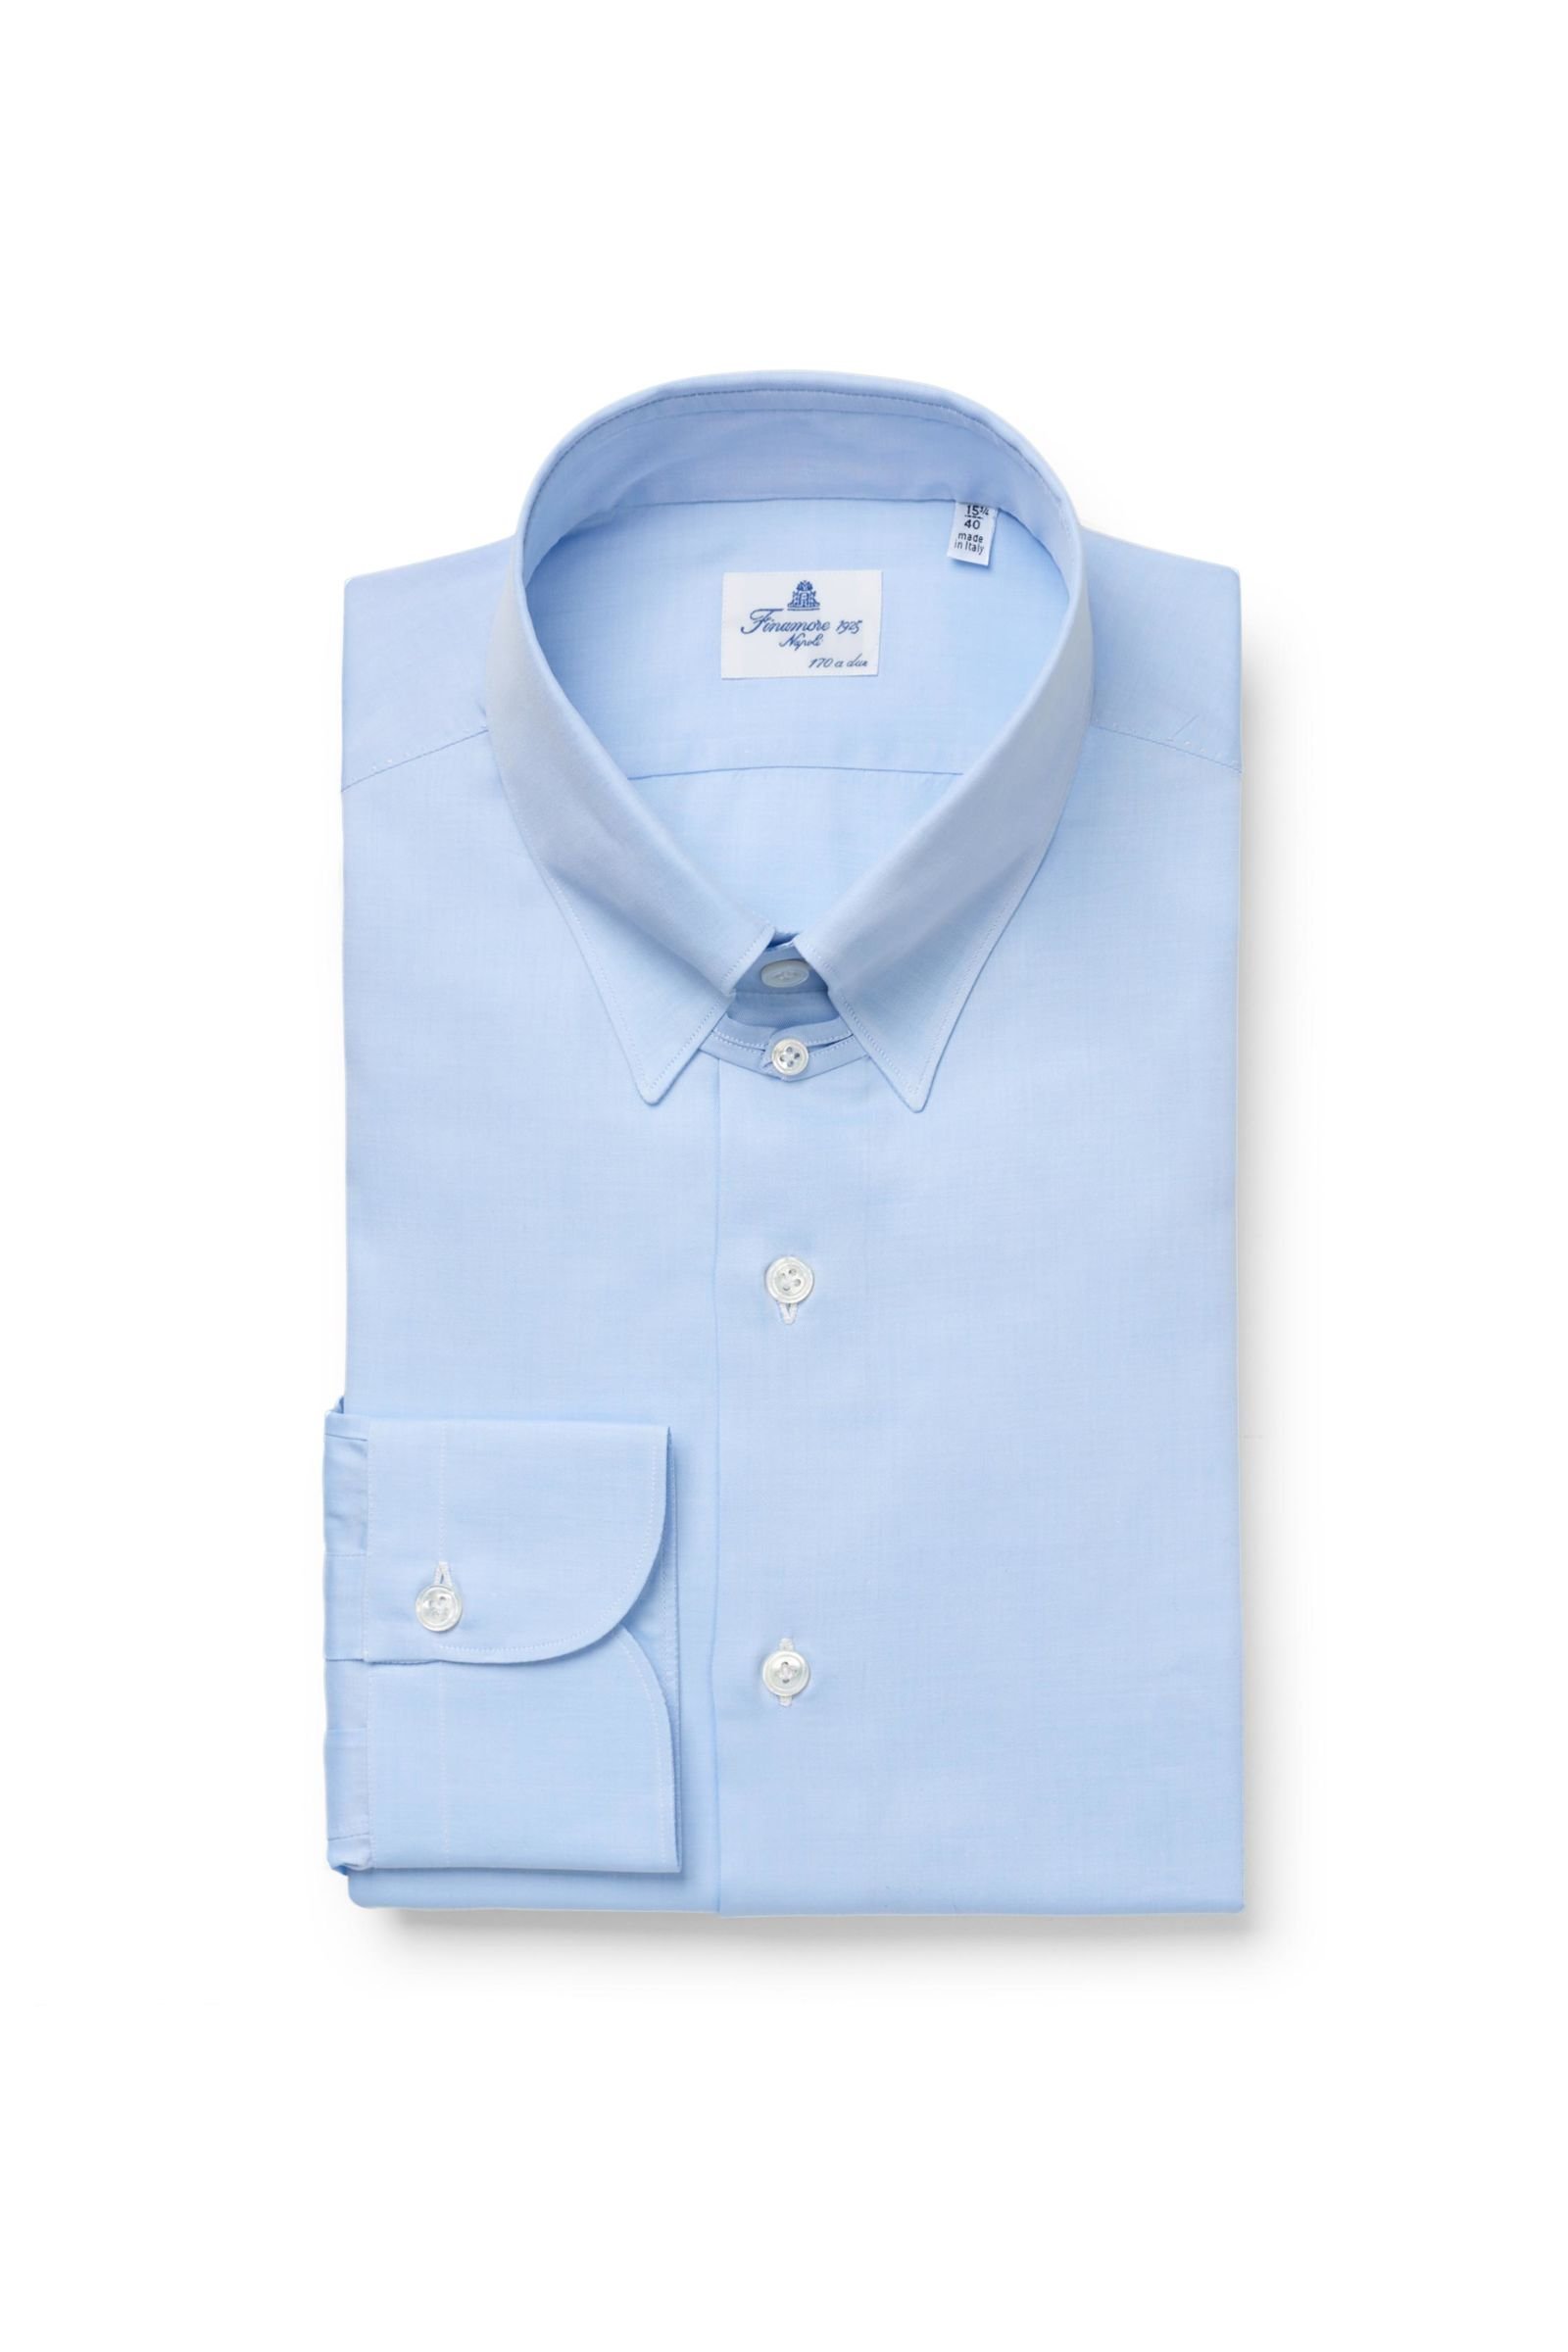 Business shirt 'Augusto Milano' English collar pastel blue